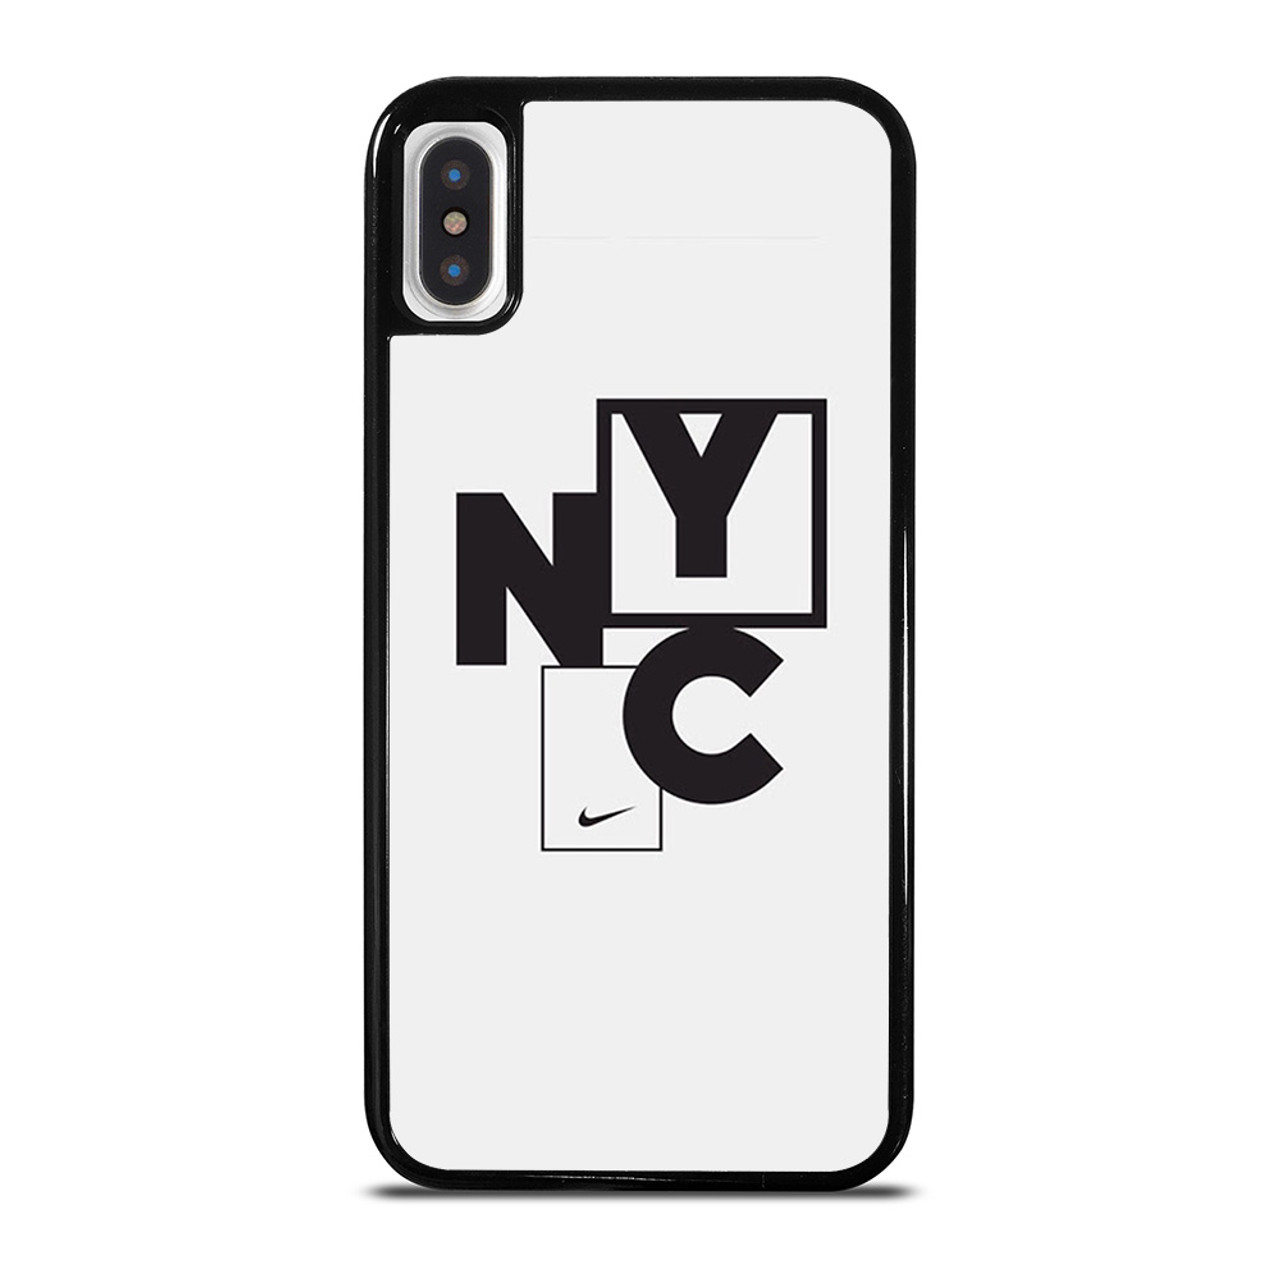 NYC LOGO iPhone X / Case